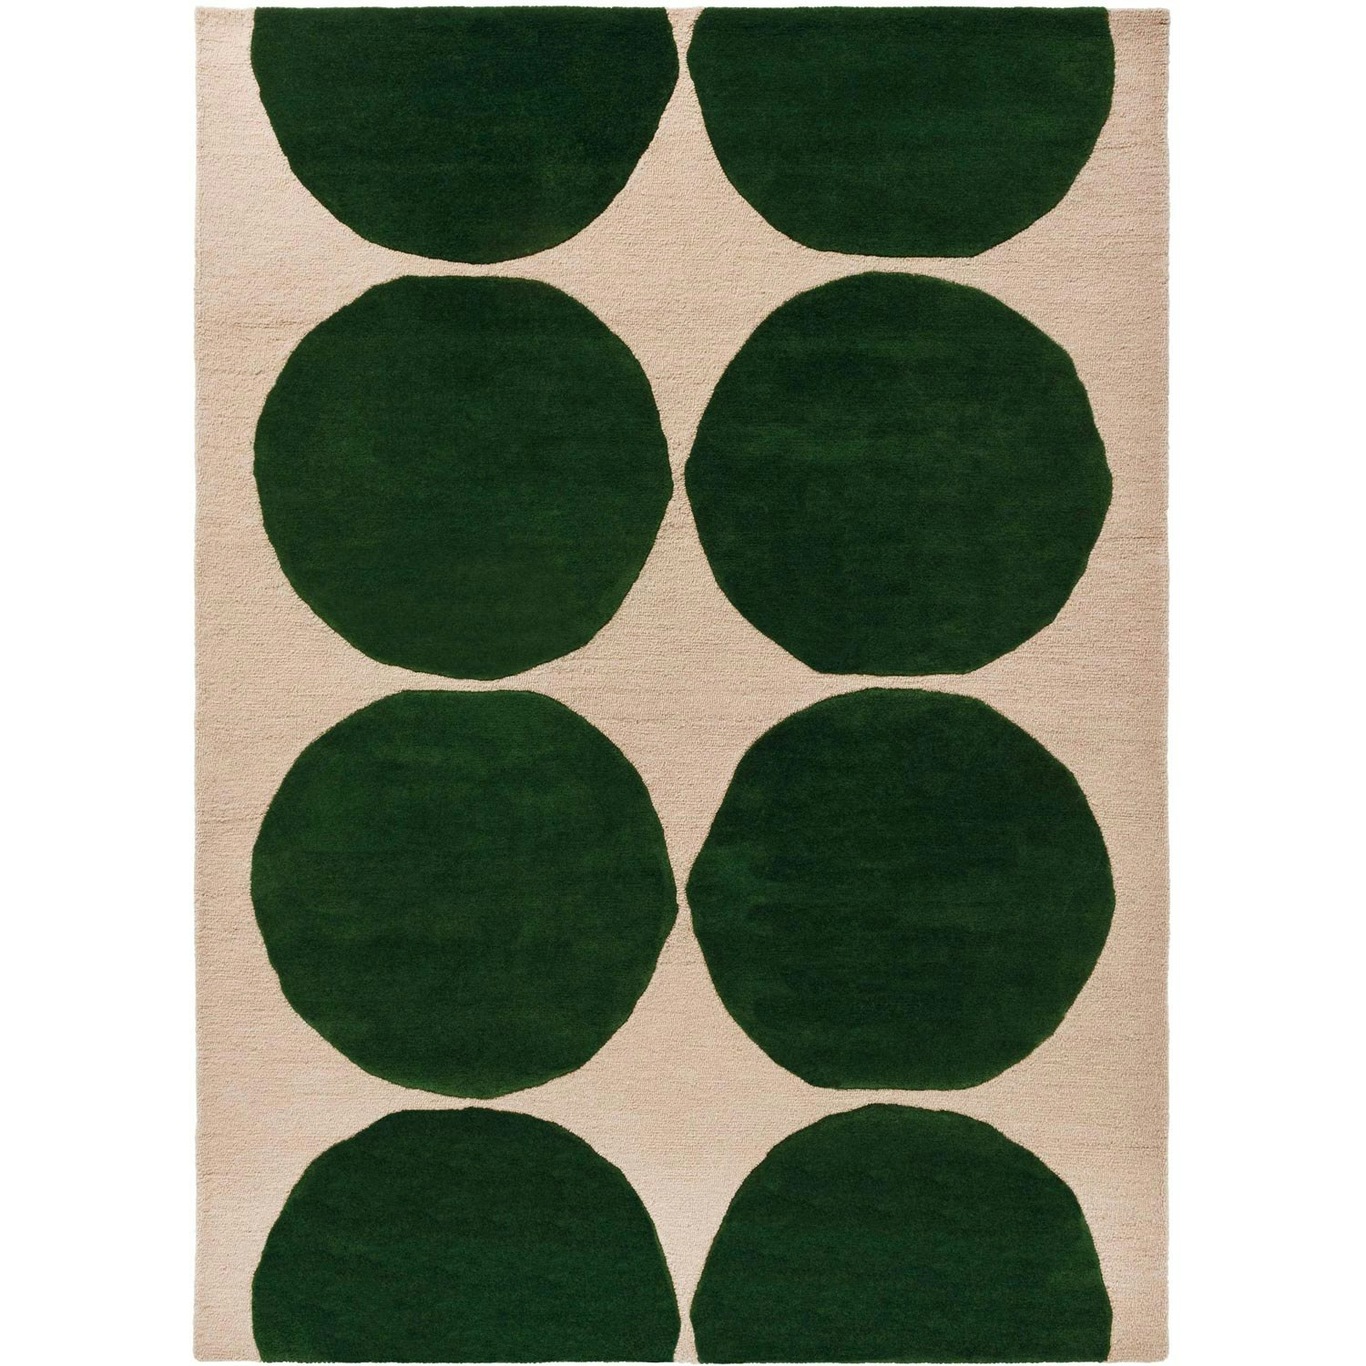 Marimekko Isot Kivet Rug 200x300 cm, Green